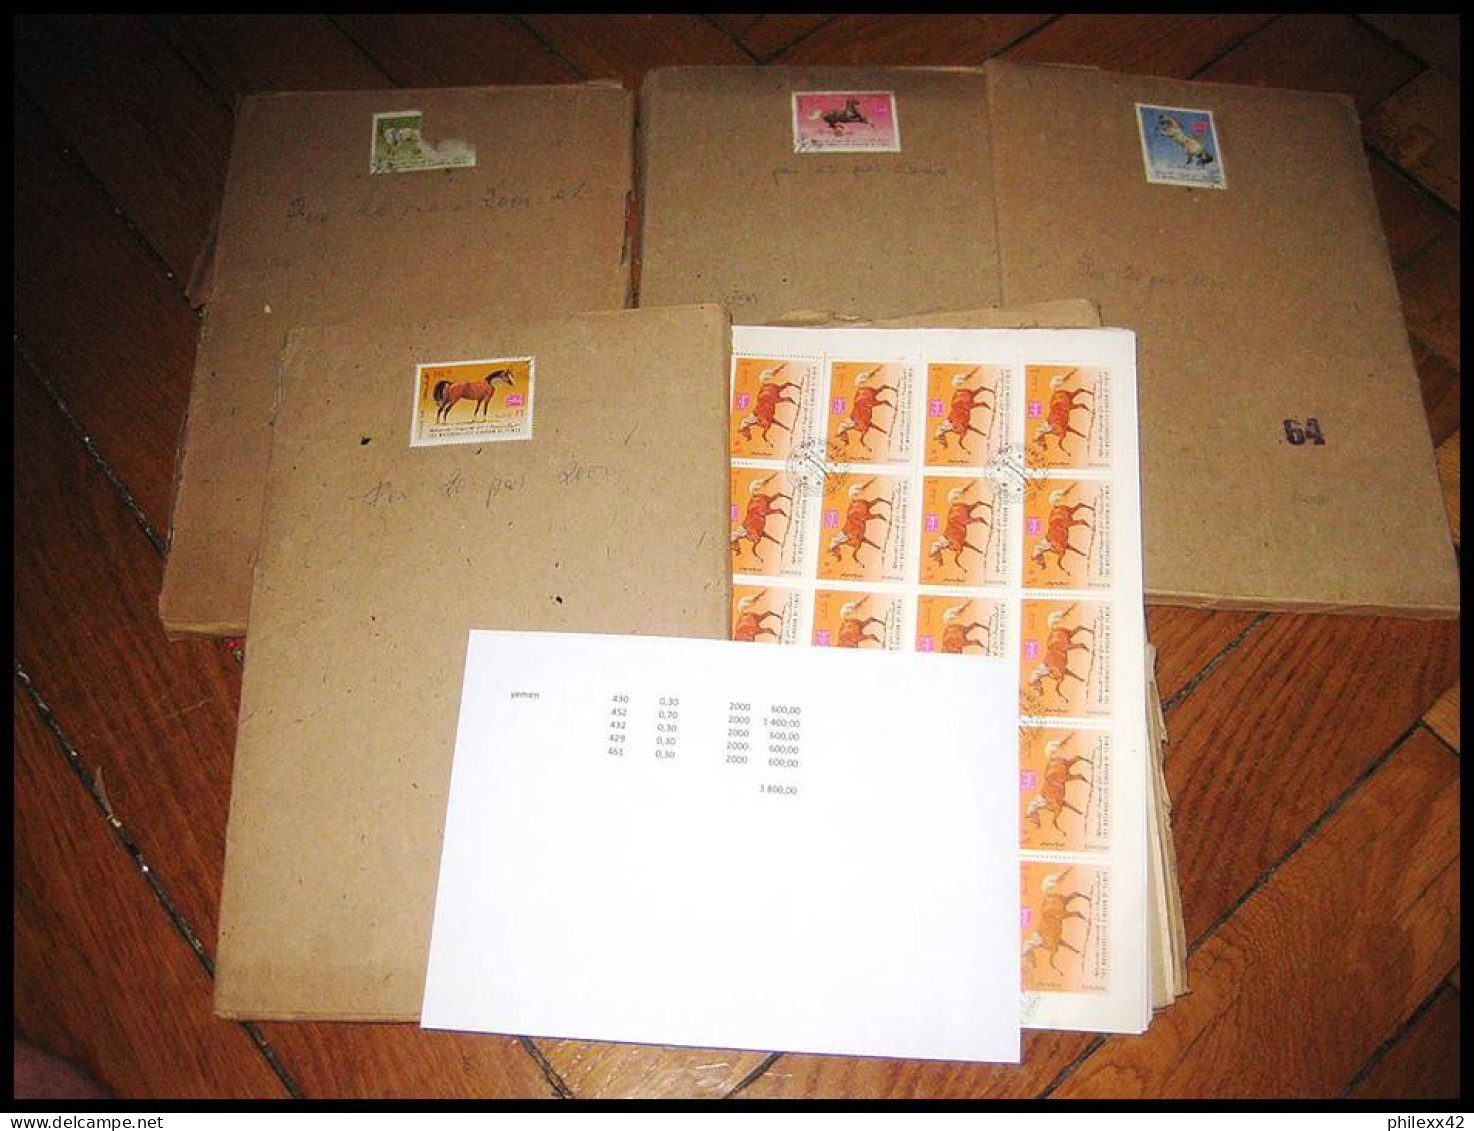 10-2 gros Cartons  timbres en feuilles + de 50 kg cote + de 56000.00 euros  voir description topics 1.5 % de la cote